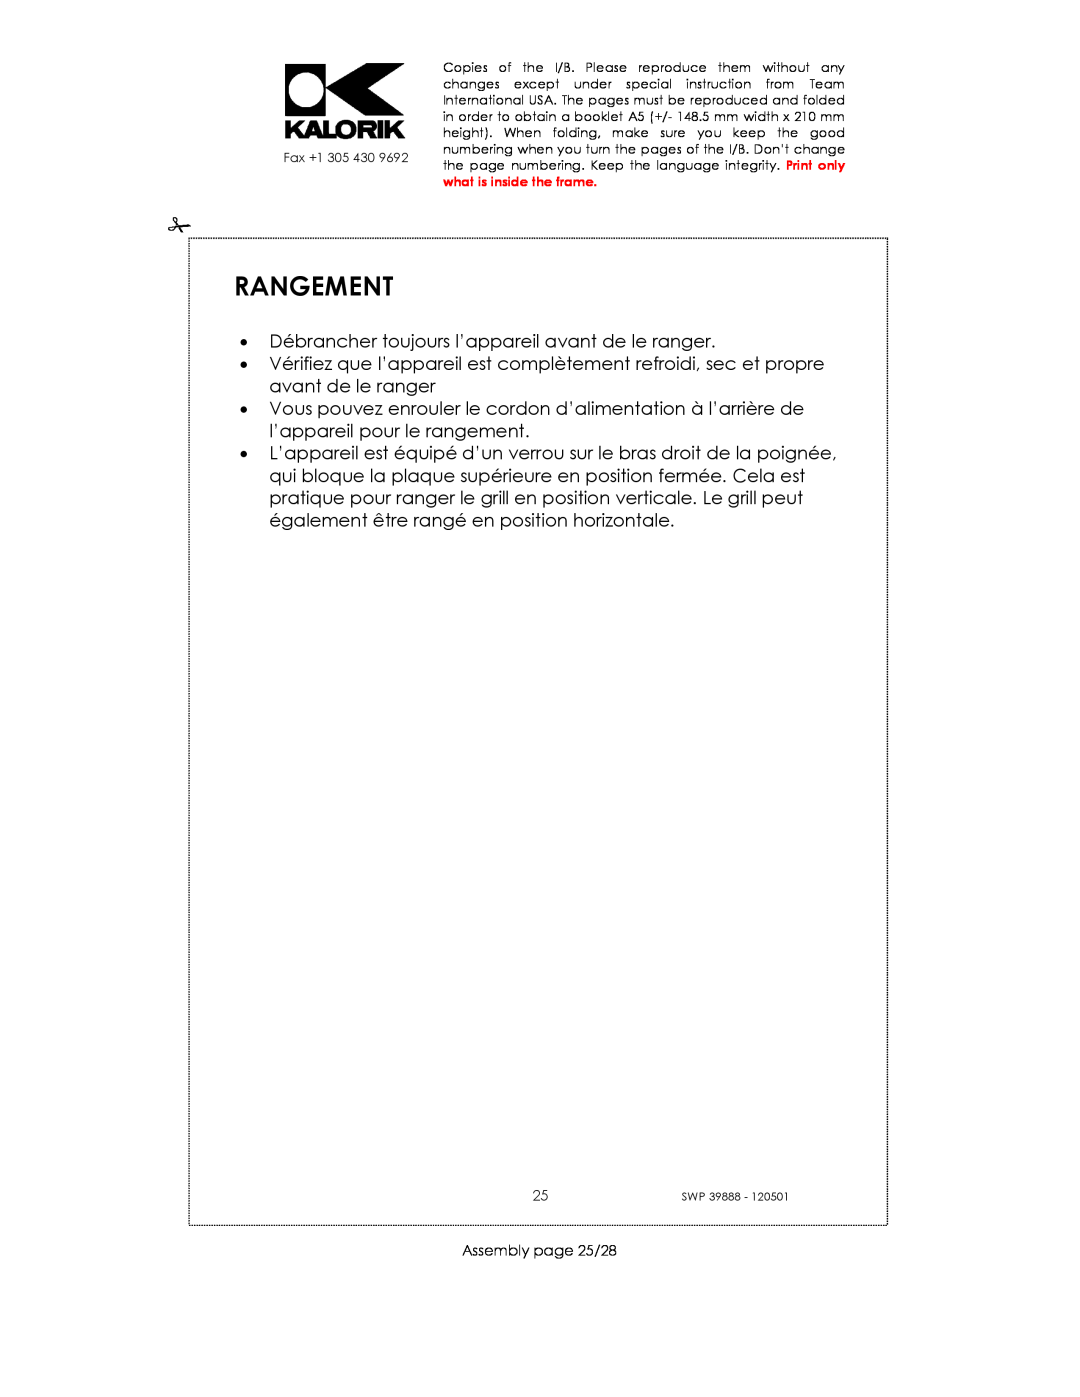 Kalorik SWP 39888 manual Rangement, Assembly page 25/28 